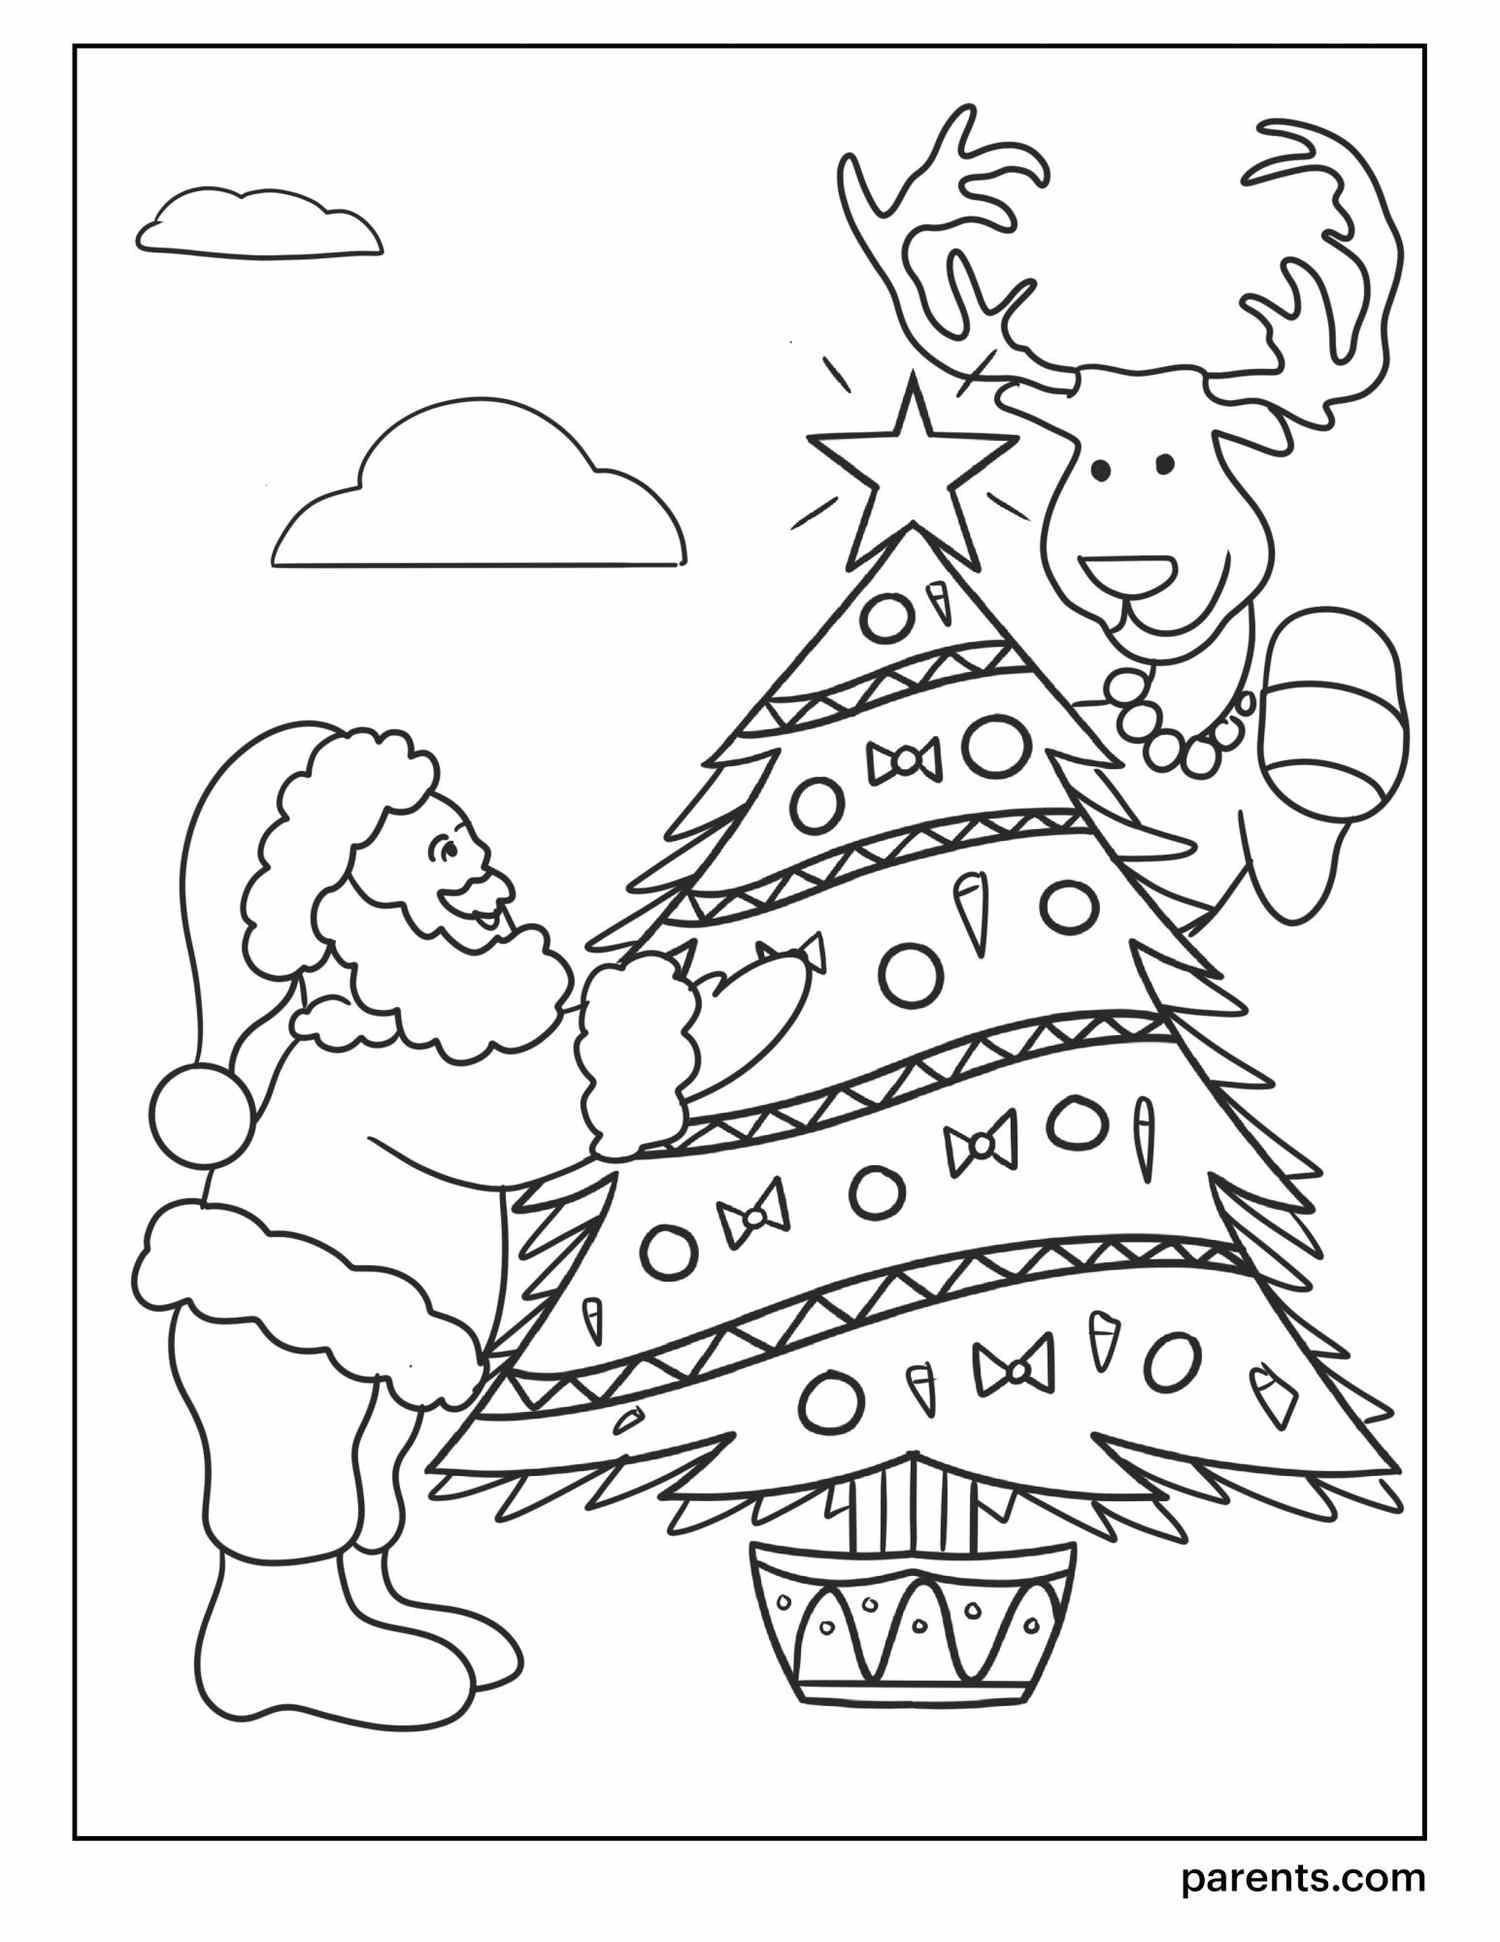 Santa and Reindeer Christmas Tree Coloring Page